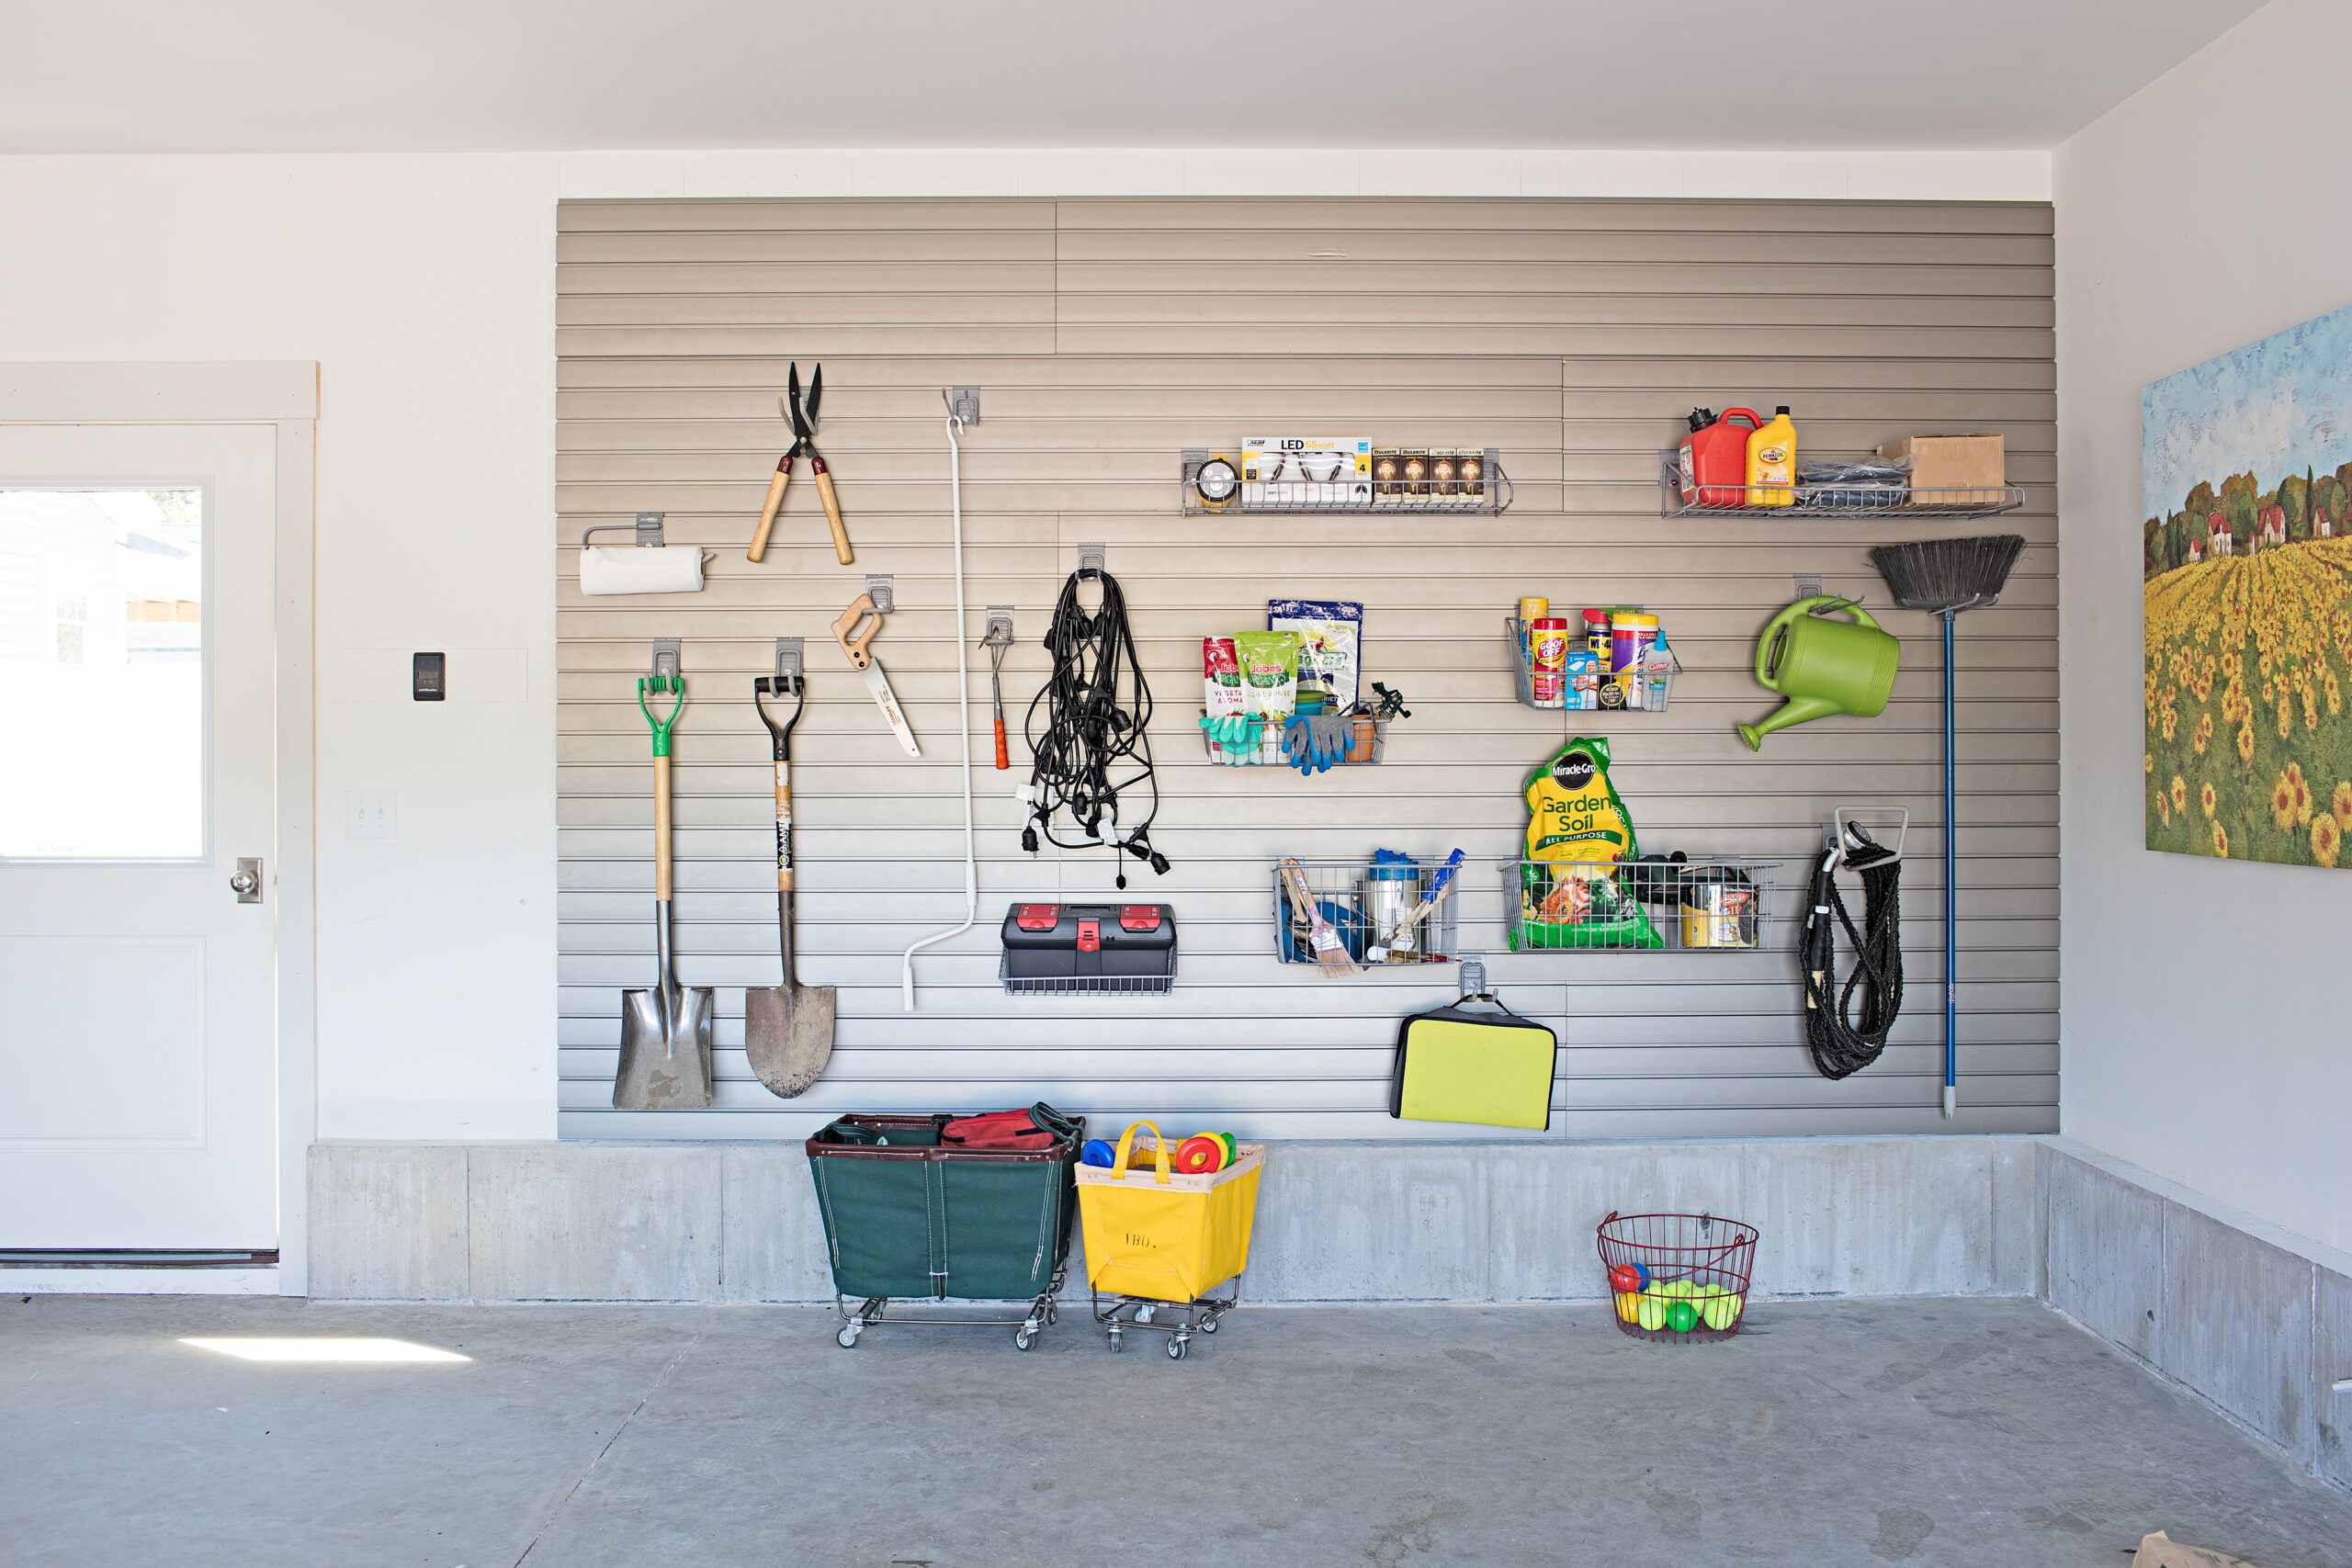 How to Replace Garage Door Opener: Quick and Easy Guide